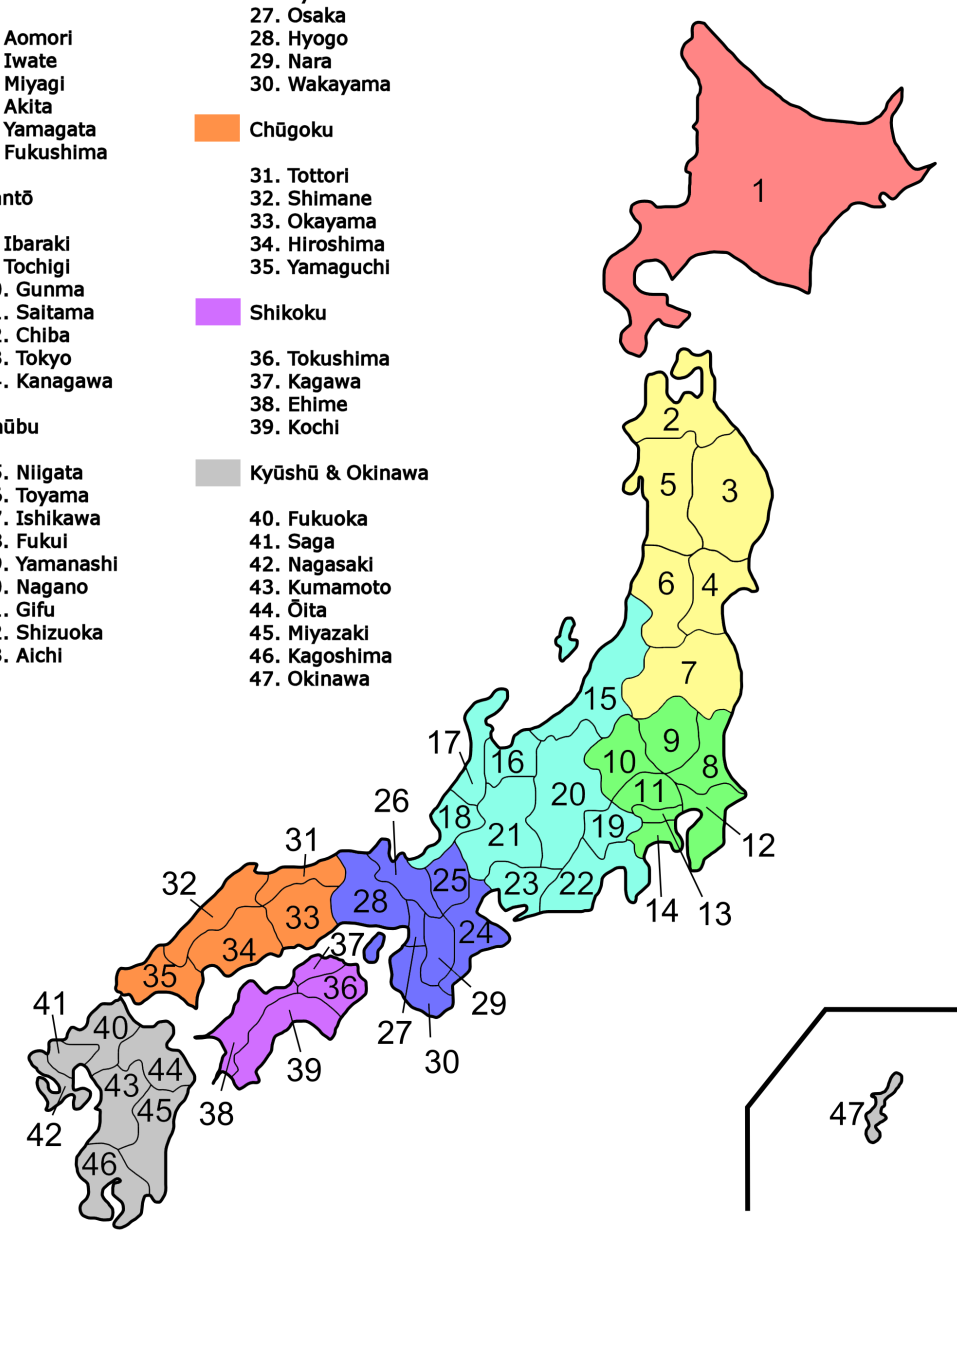 Restriksjoner på matvarer Storfekjøtt: Fukushima (7), Tochigi (9), Miyagi (4), Iwate (3) Shiitake-sopp: Teblad: